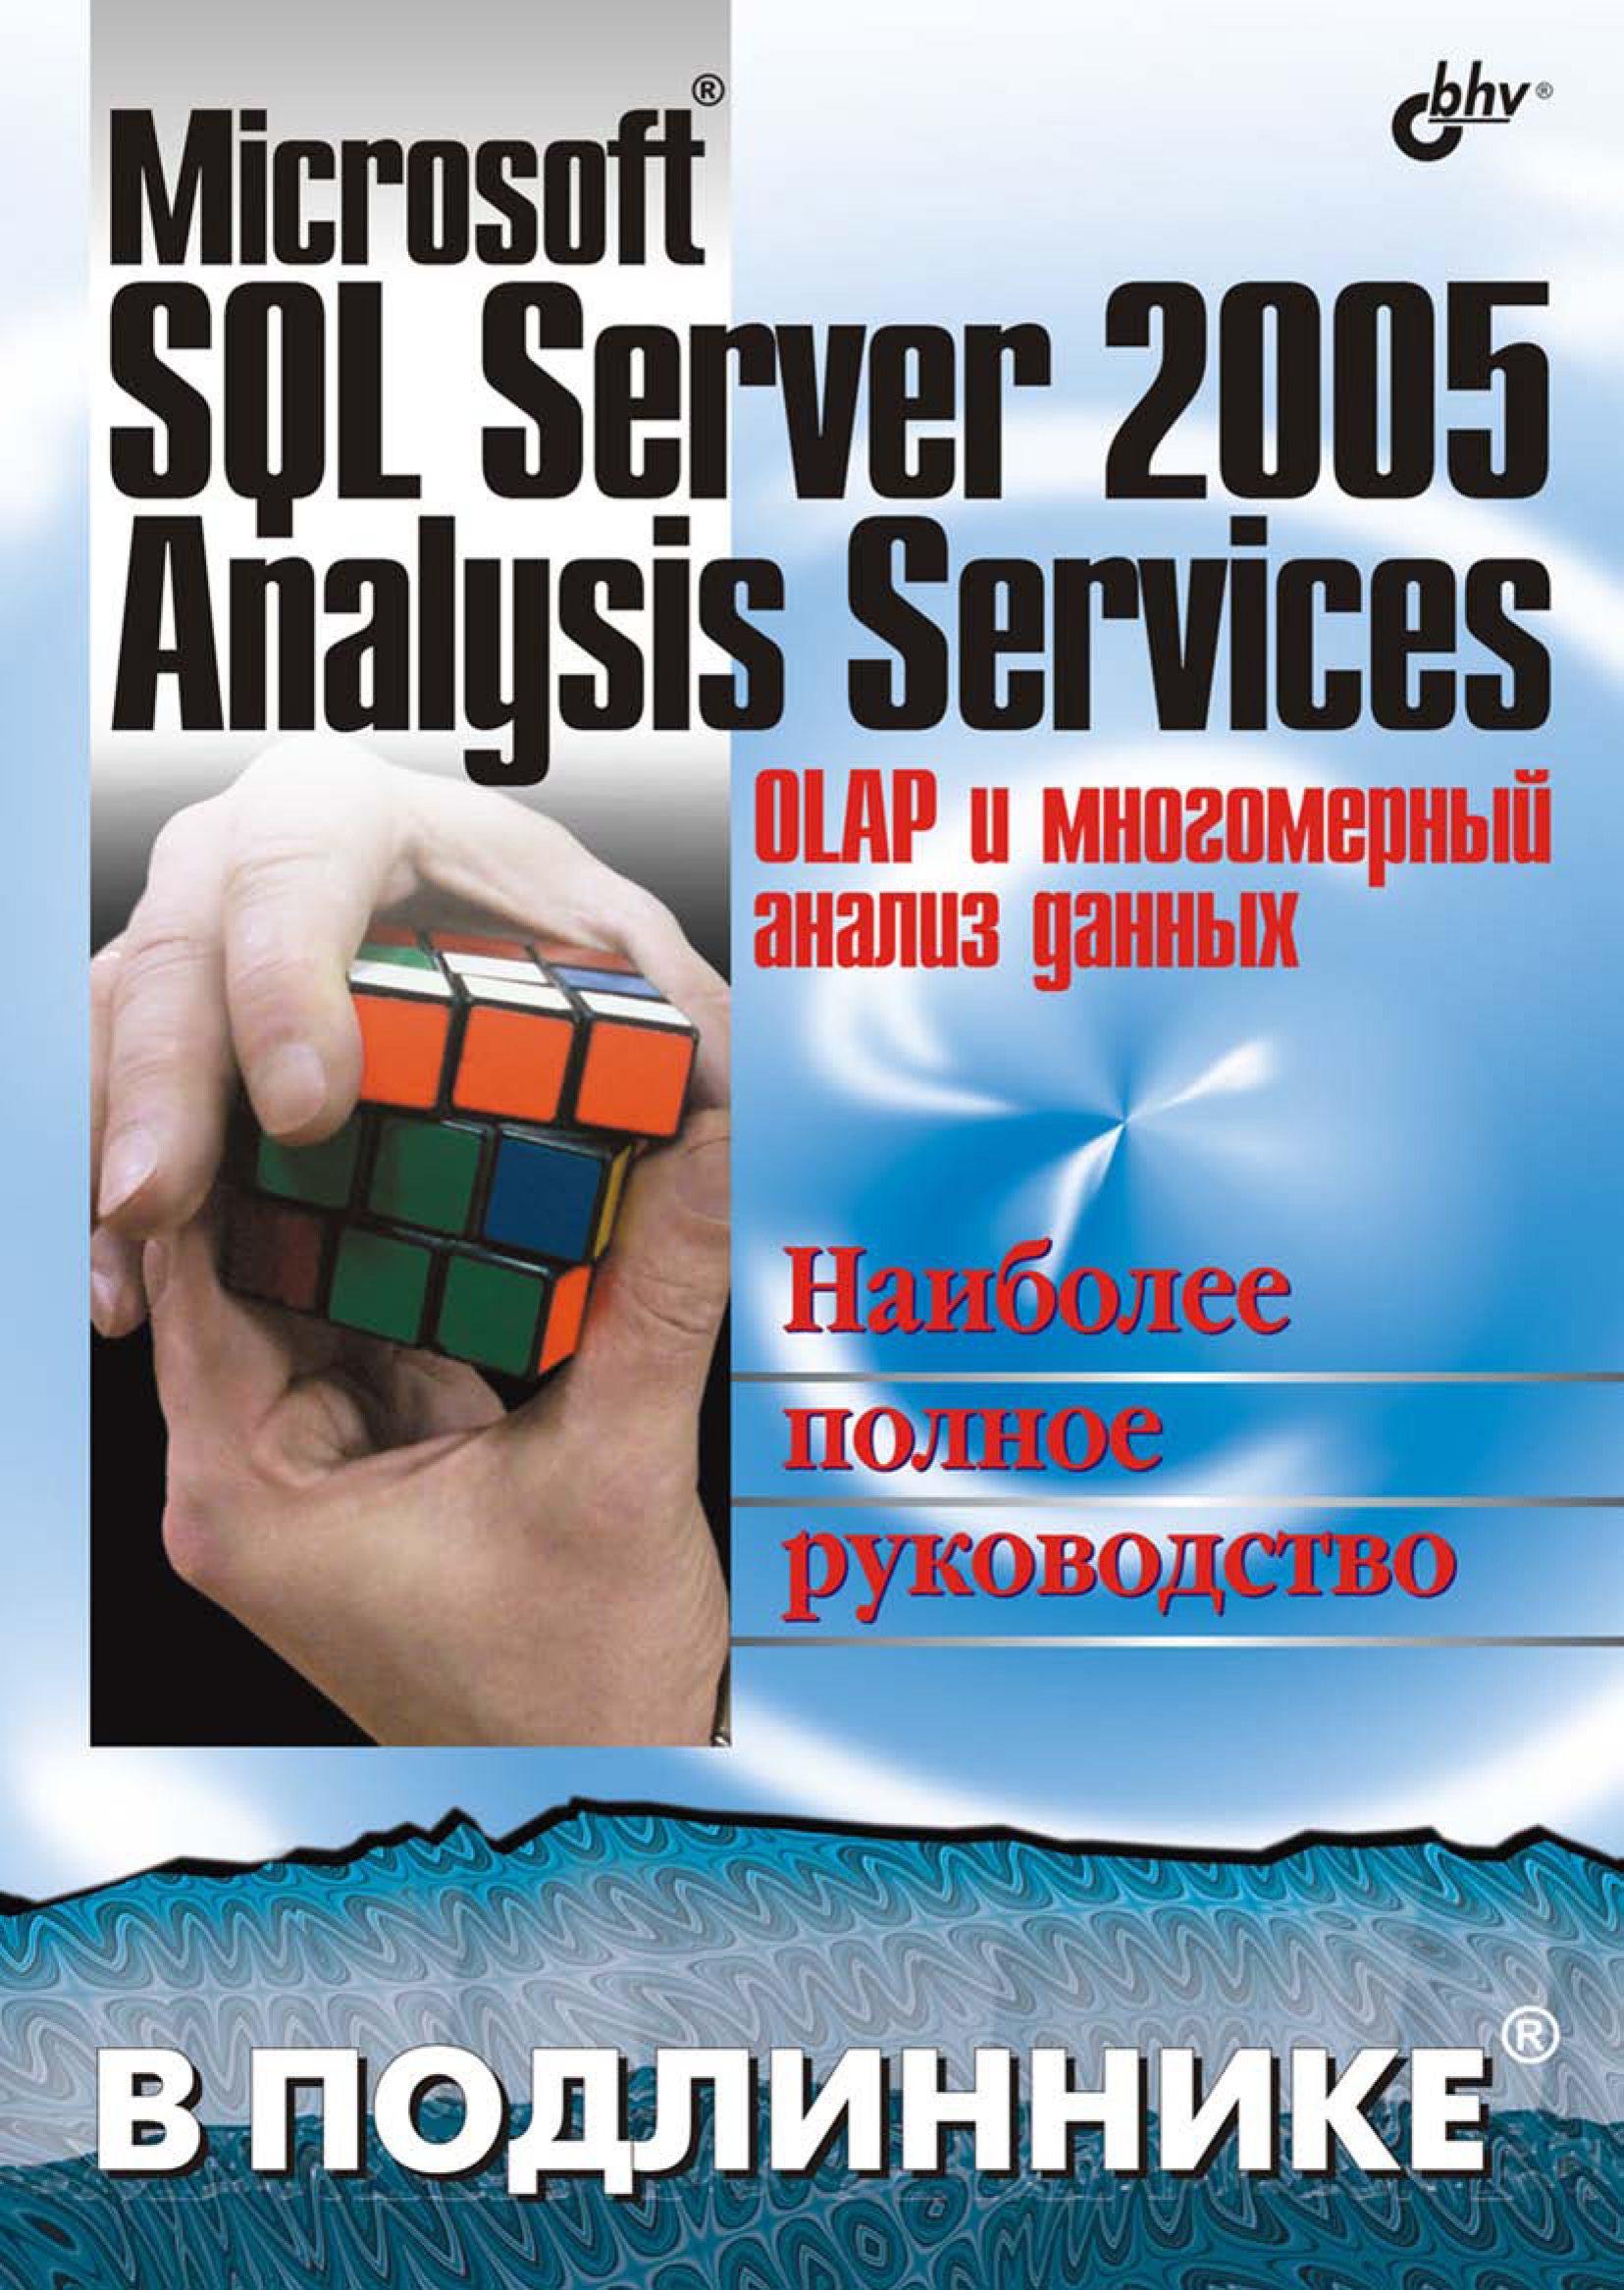 Microsoft SQL Server 2005 Analysis Services. OLAPи многомерный анализ данных